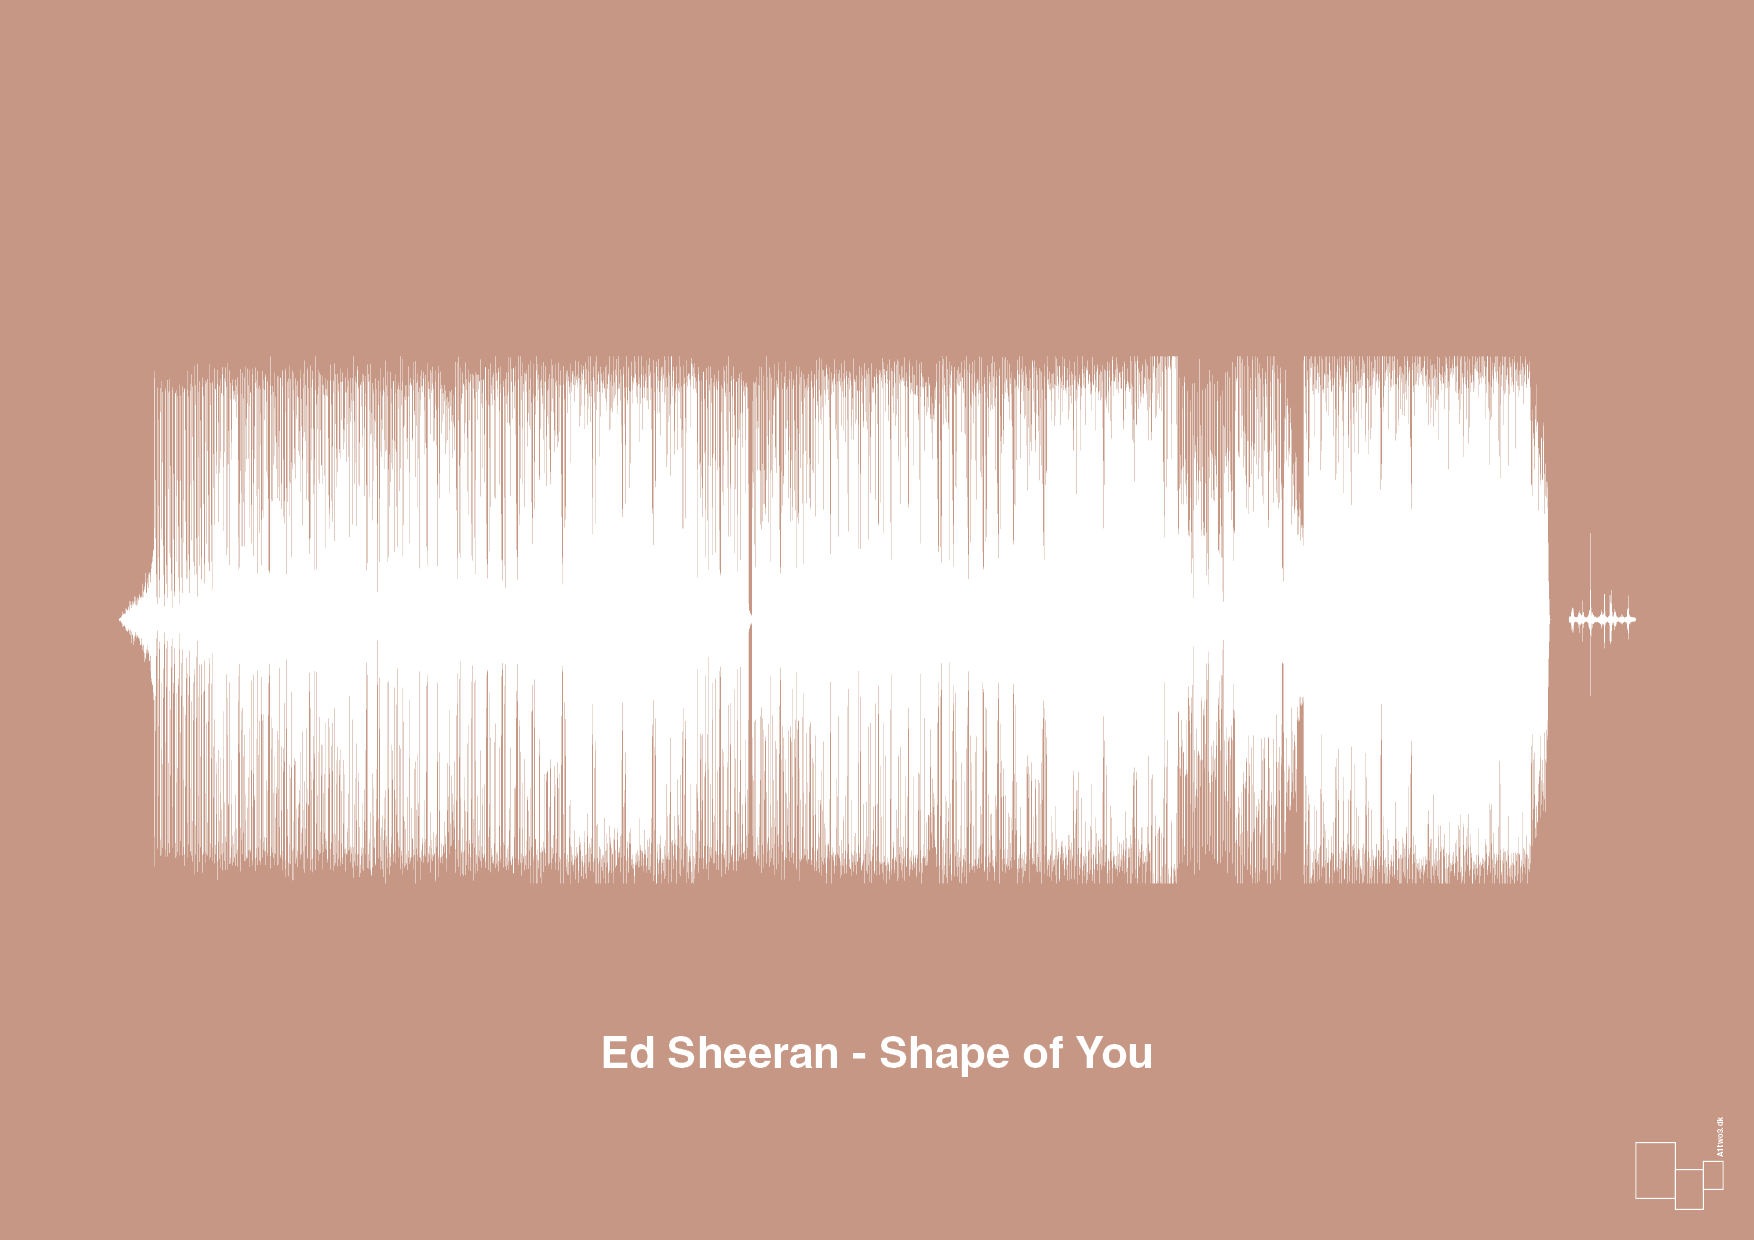 ed sheeran - shape of you - Plakat med Musik i Powder